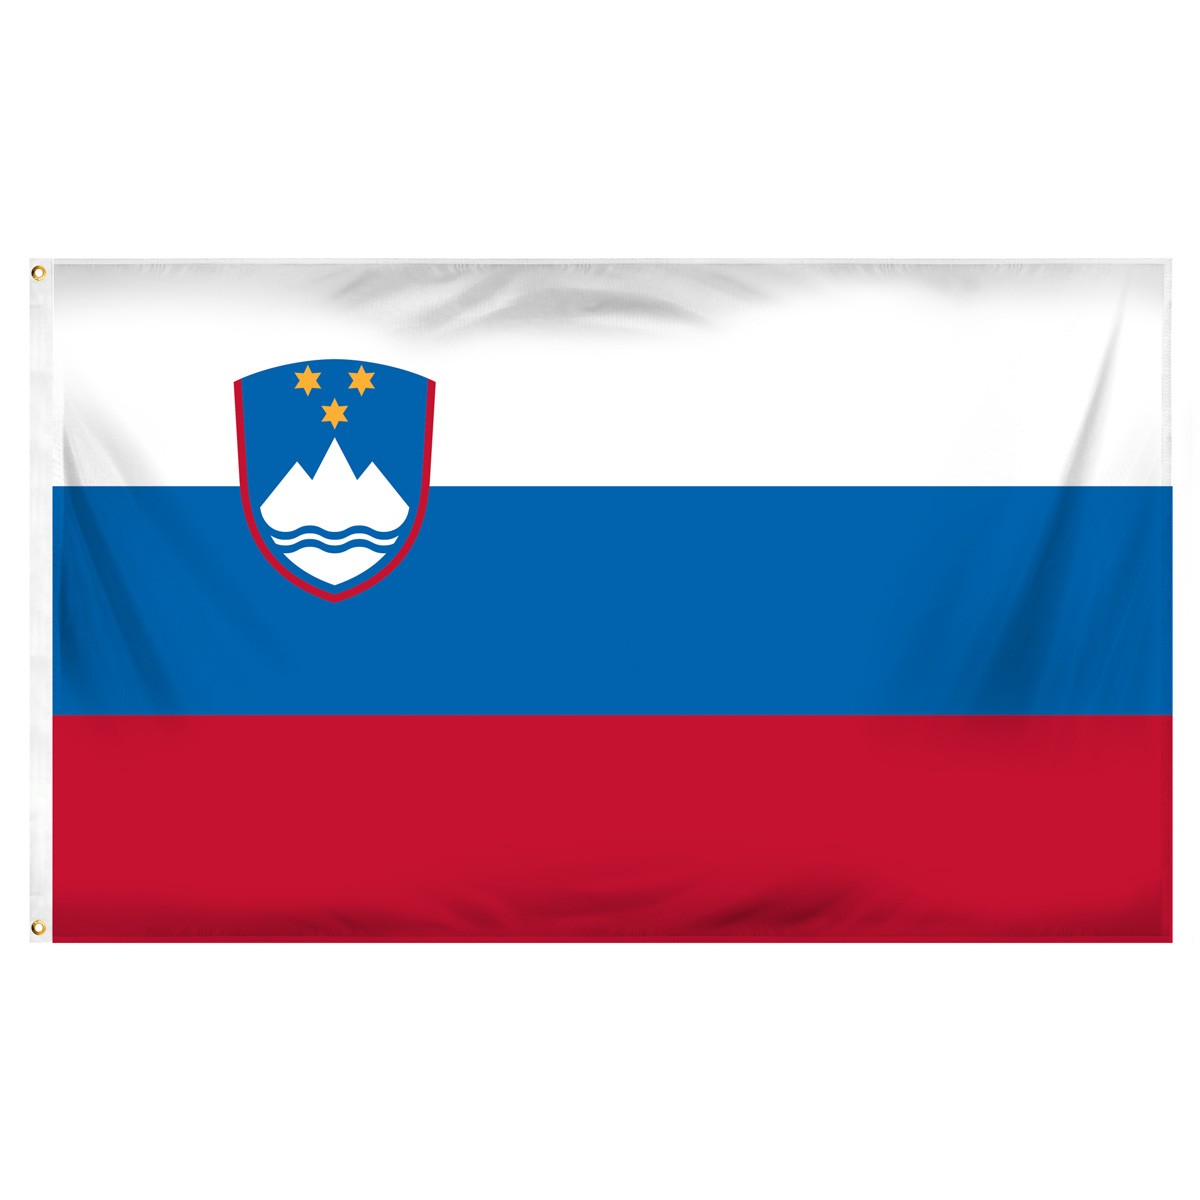 Slovenia Flags and Pennants